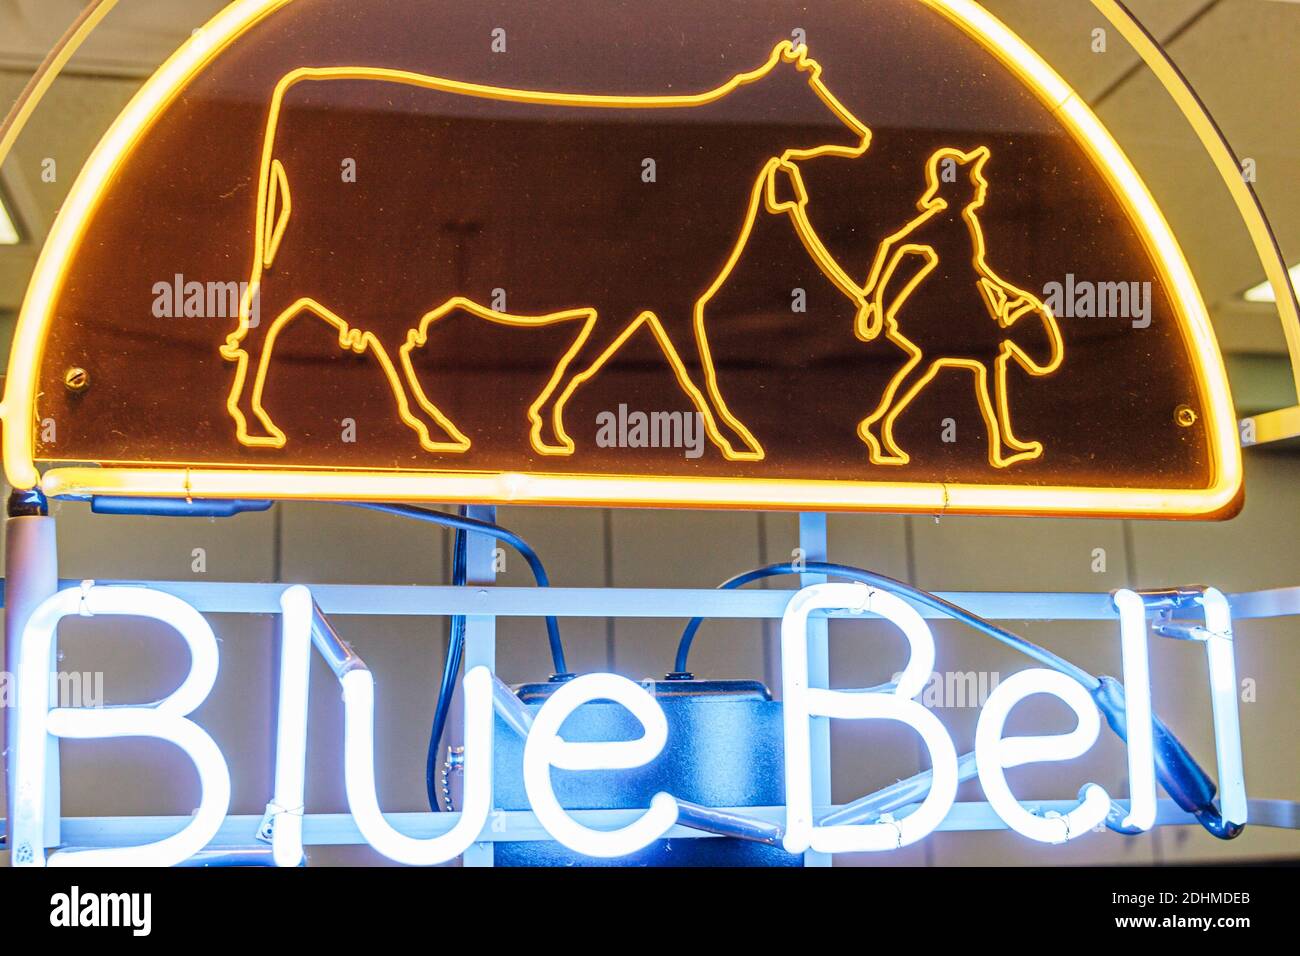 Alabama Sylacauga Blue Bell Creameries ice cream manufacturing plant production,neon sign, Stock Photo